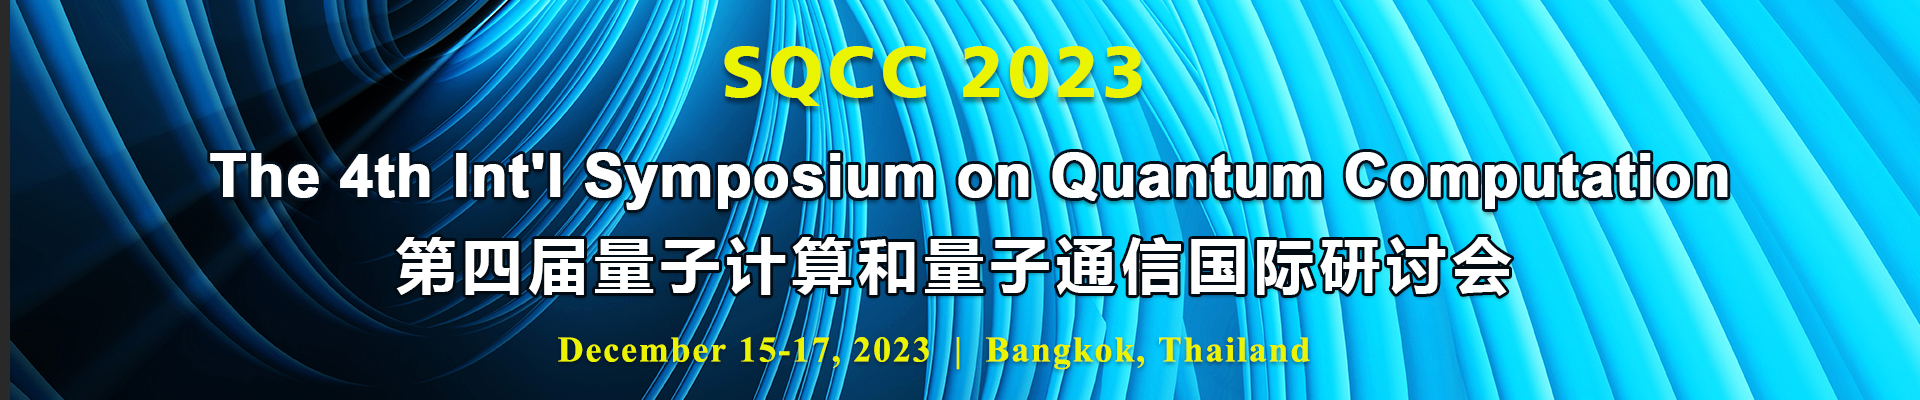 The 4th Int'l Symposium on Quantum Computation and Communication (SQCC 2023)